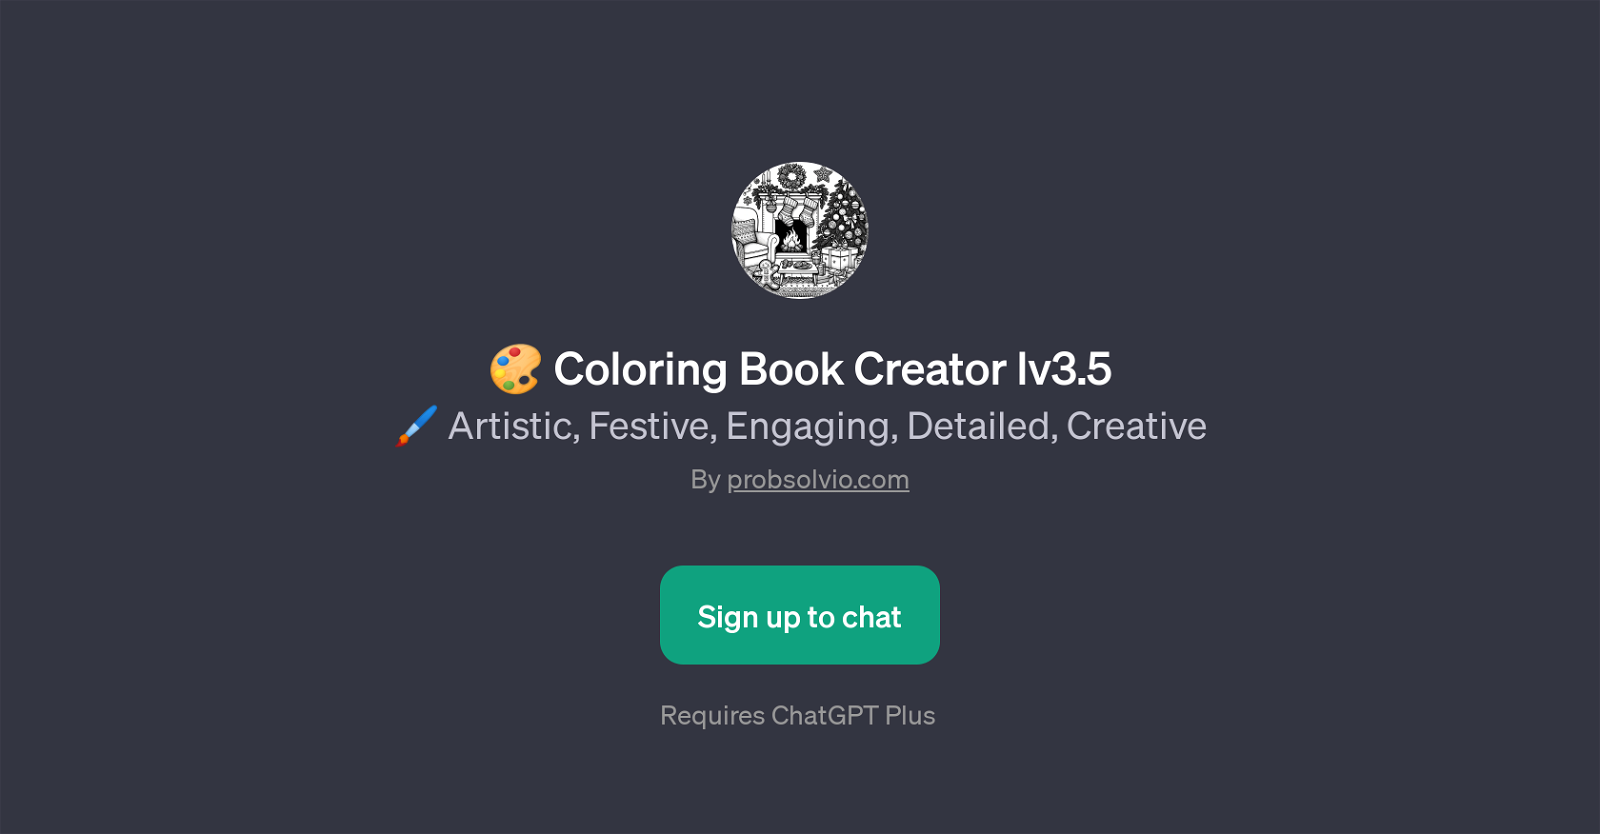 Coloring Book Creator lv3.5 website